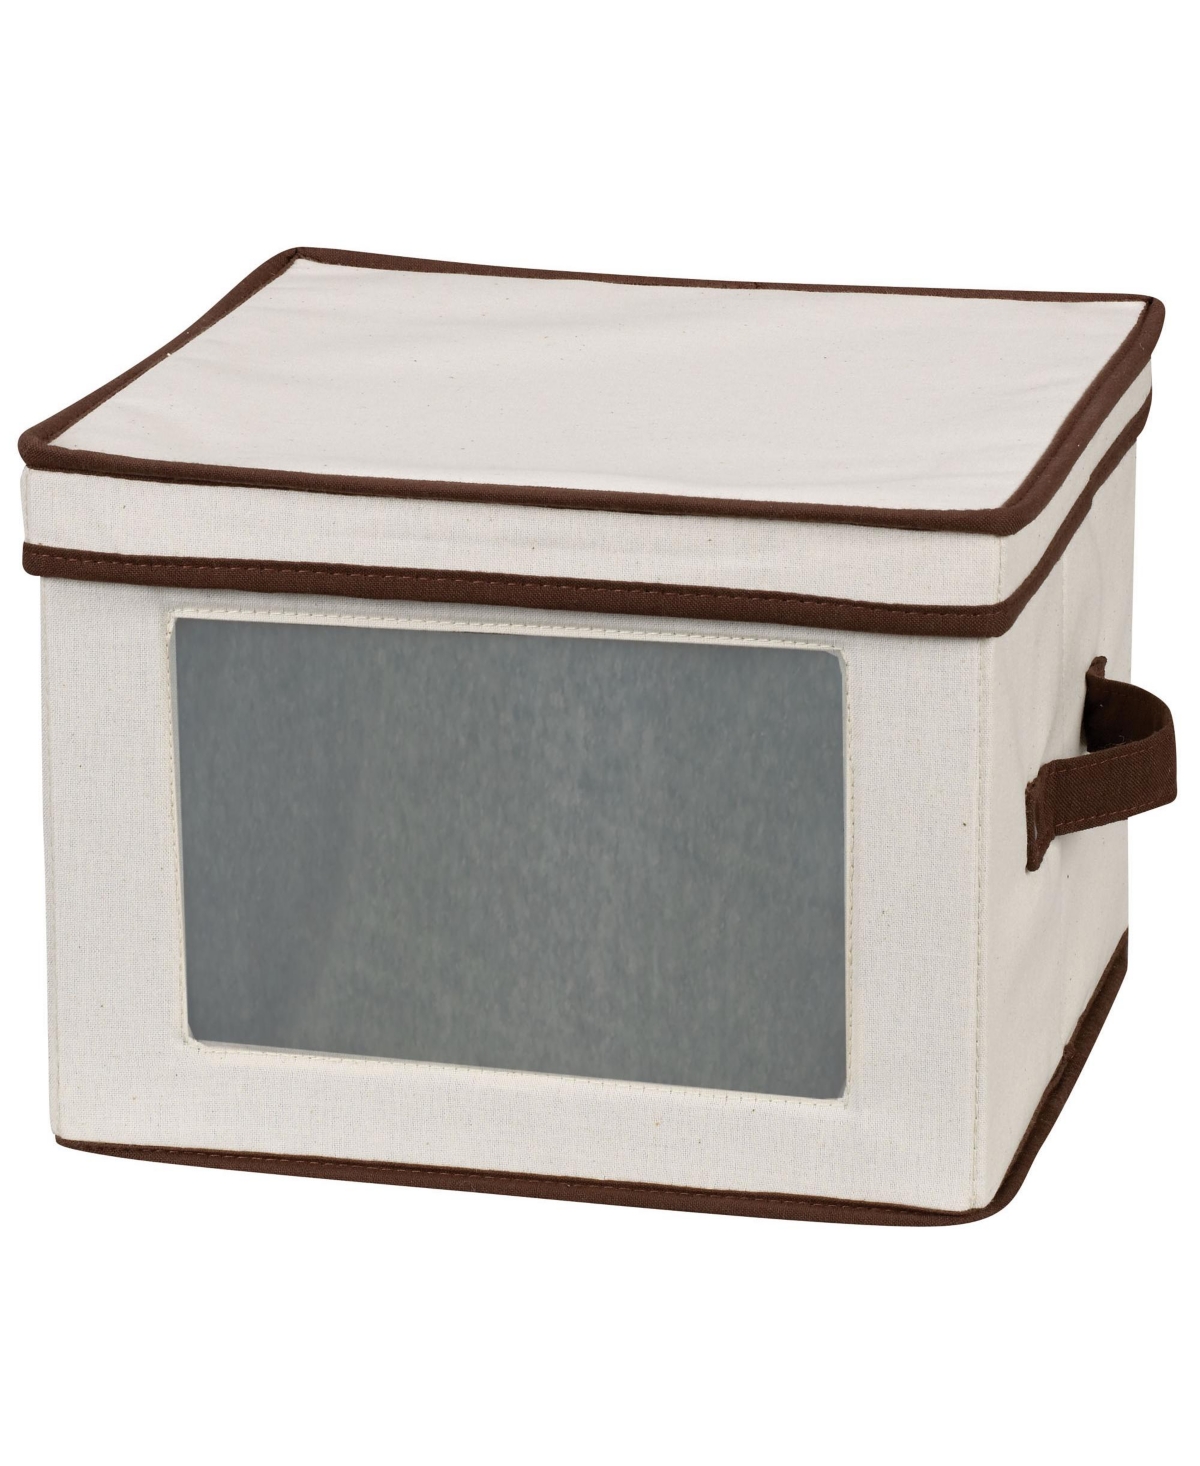 Household Essentials Dinner Plate Storage Box In Cream,natural